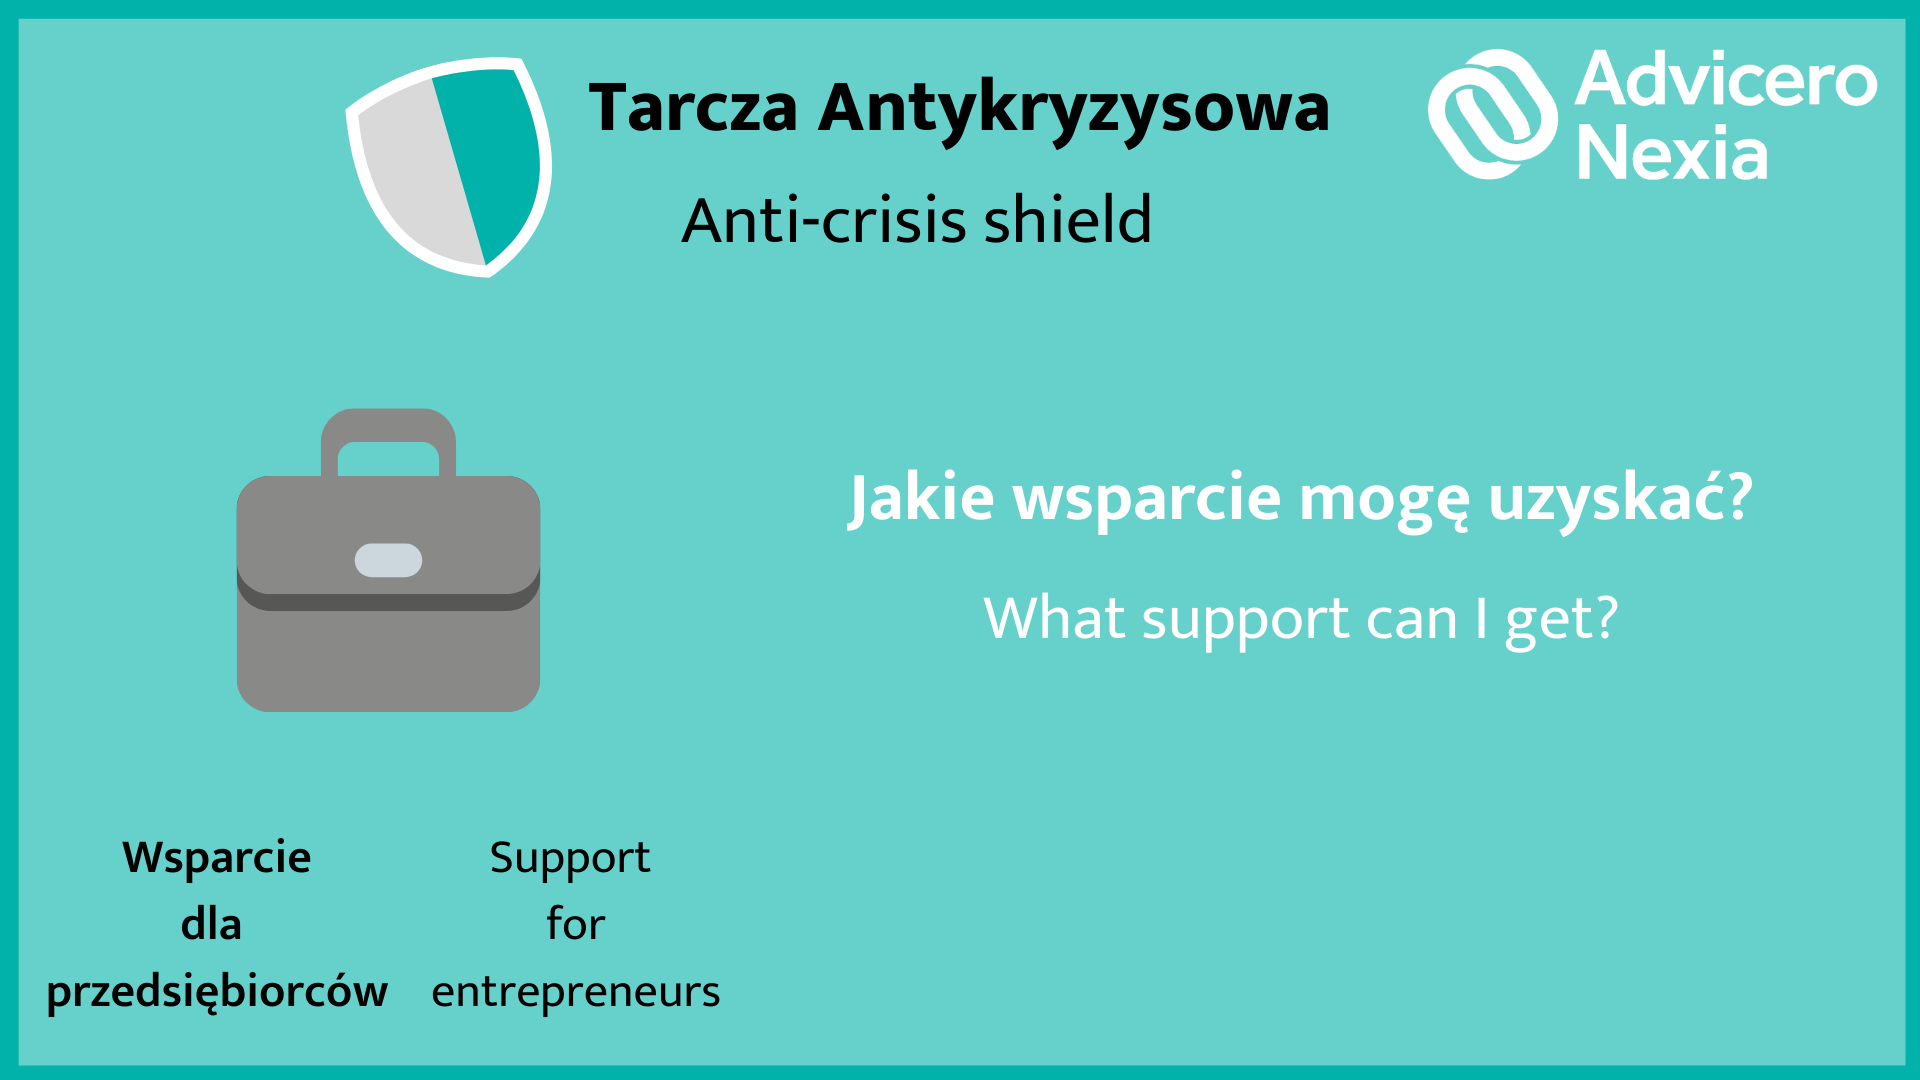 Tarcza Antykryzysowa v3 - Anti-Crisis Shield: Non-repayable (partially repayable) financial aid for Polish entrepreneurs